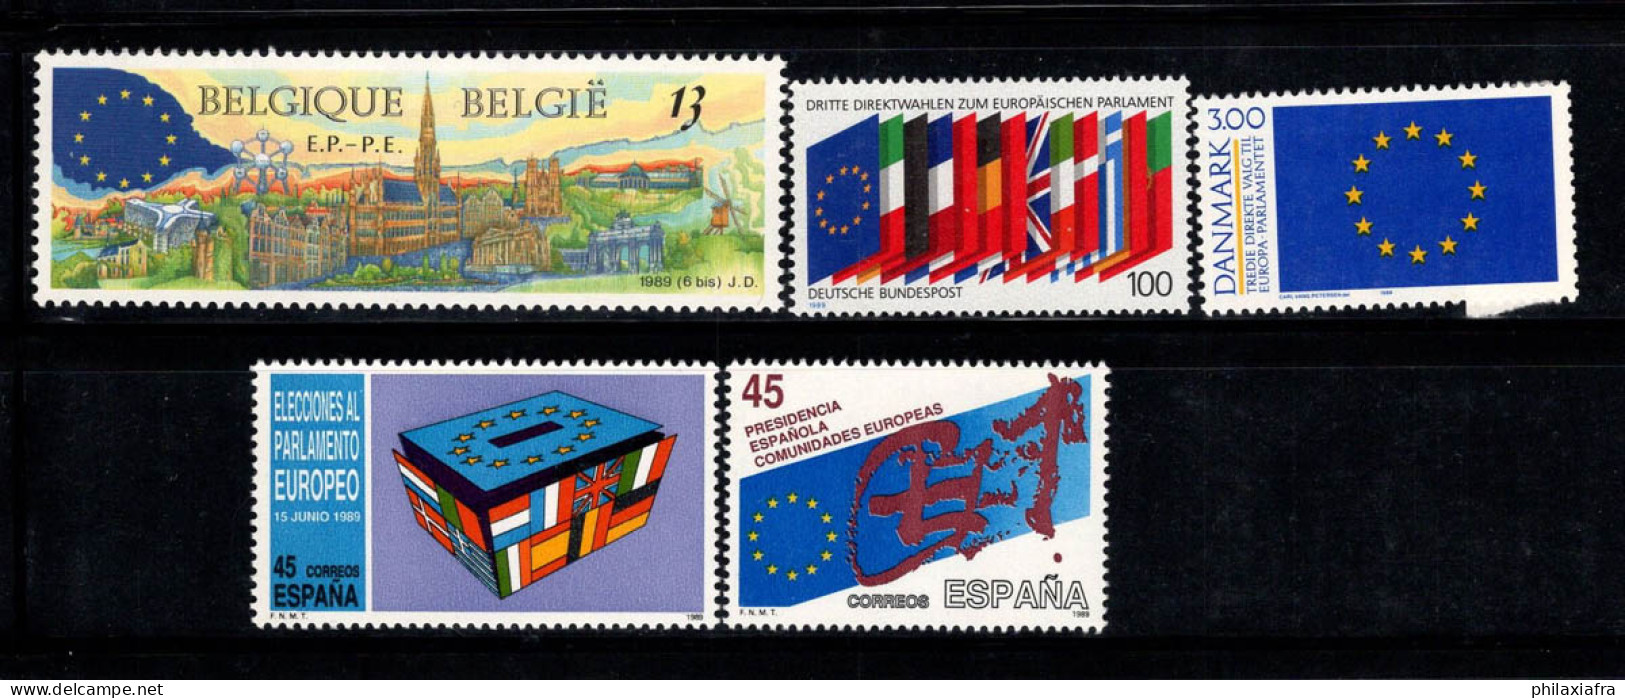 Europe CEPT 1989 Neuf ** 100% Belgique, Danemark, Allemagne - 1989